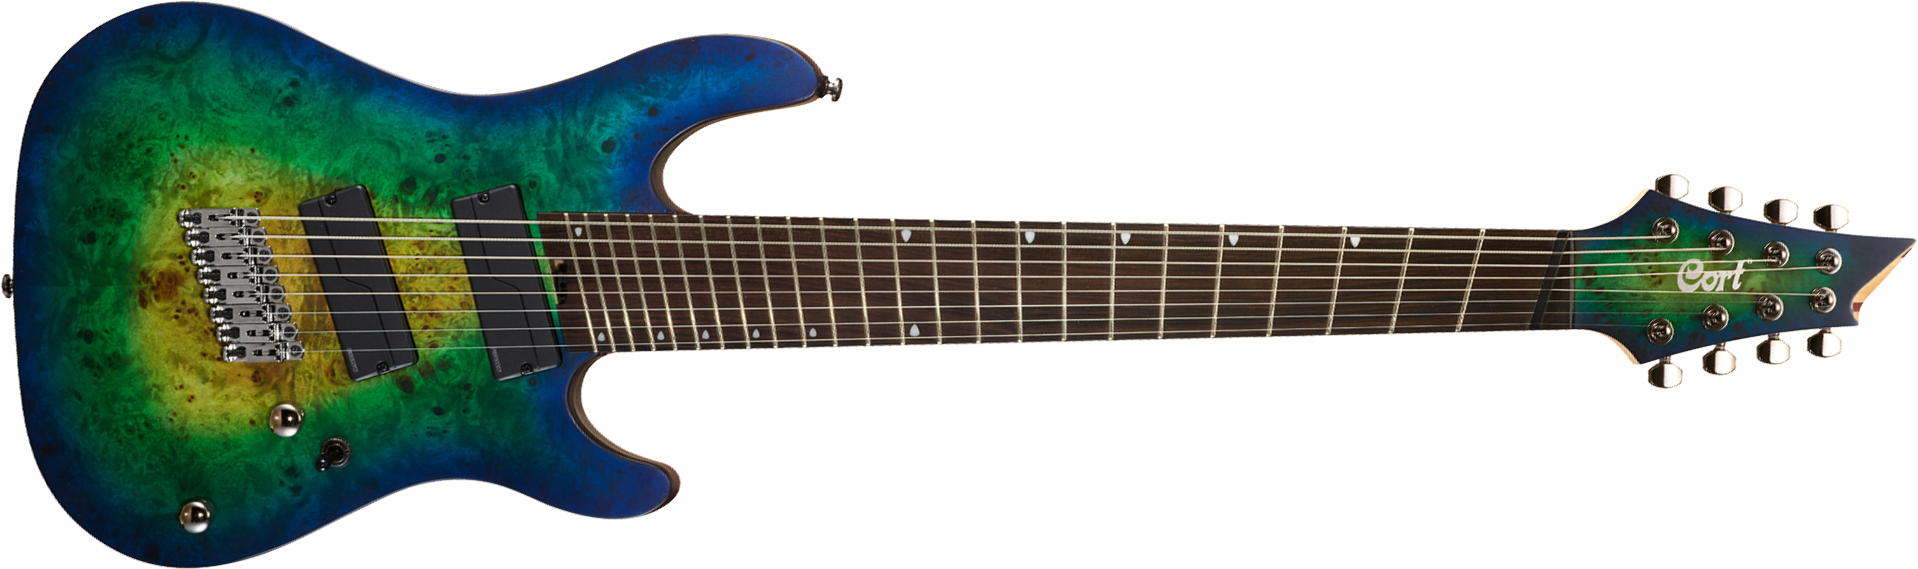 Cort Kx508ms 8c Multi Diapason Baryton Hh Fishman Fluence Eb - Mariana Blue Burst - Guitarra electrica de 8 y 9 cuerdas - Main picture